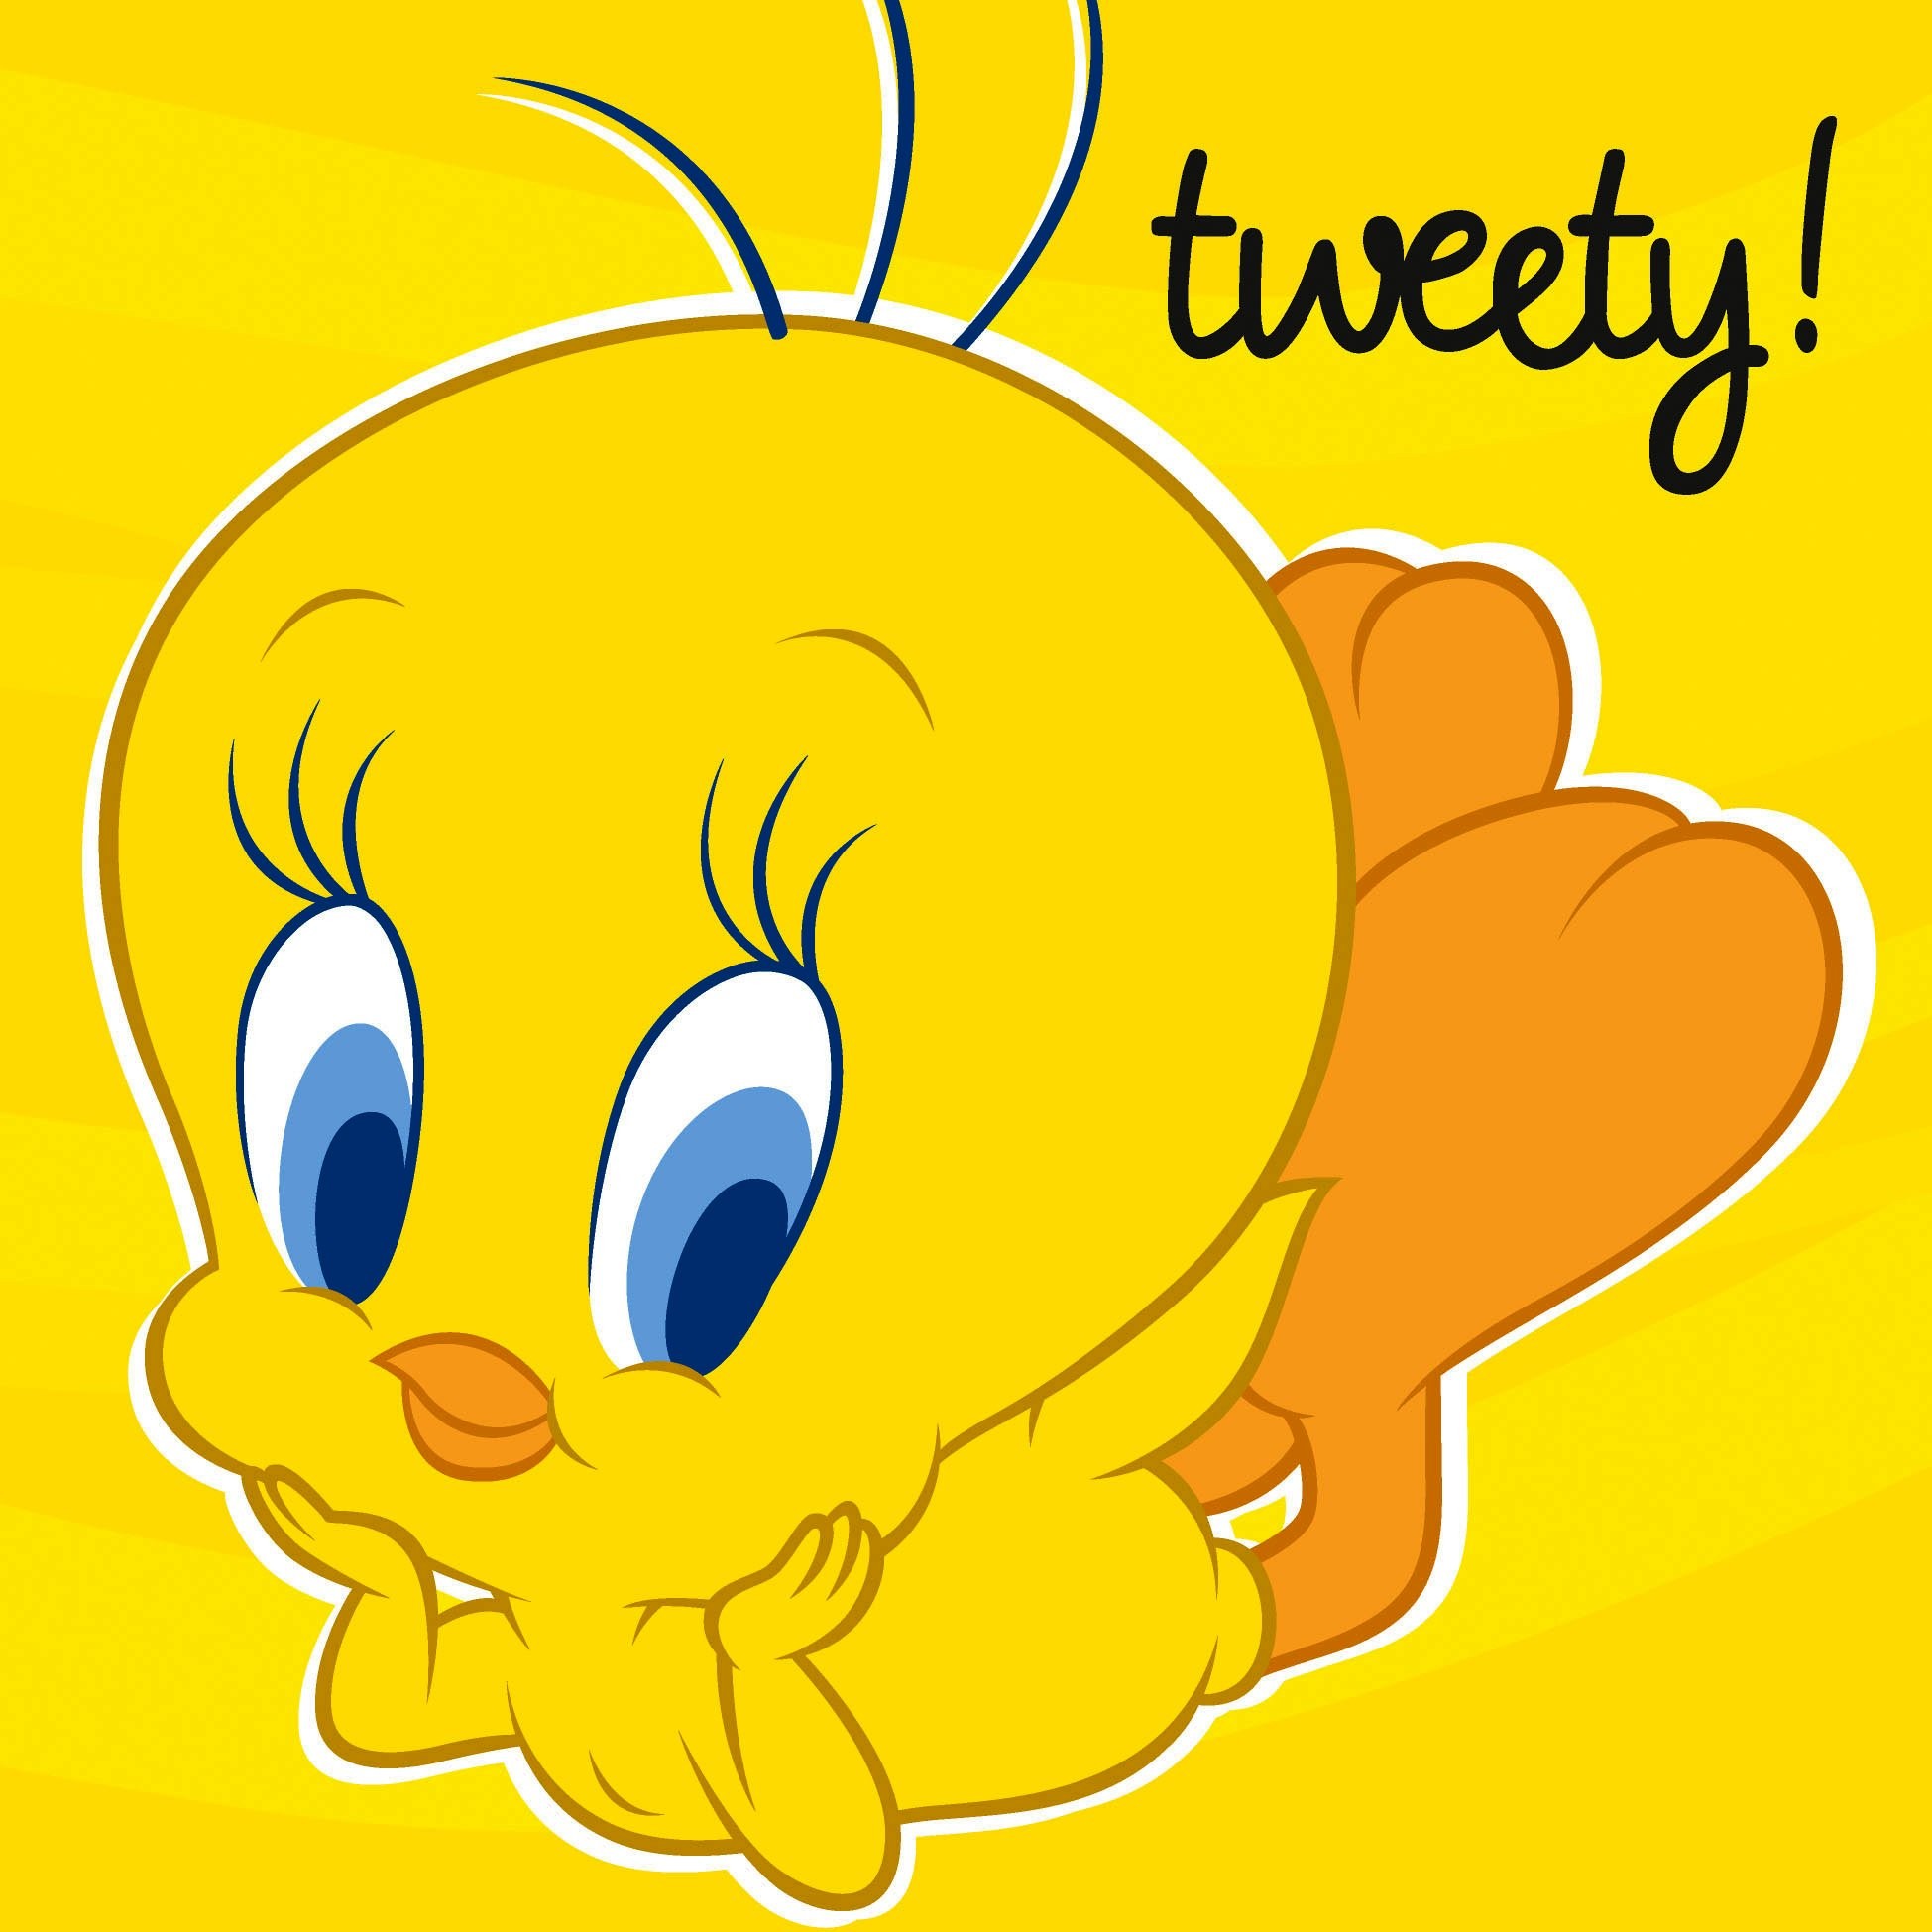 Tweety Bird wallpaper by Pratham2k2  Download on ZEDGE  fea5